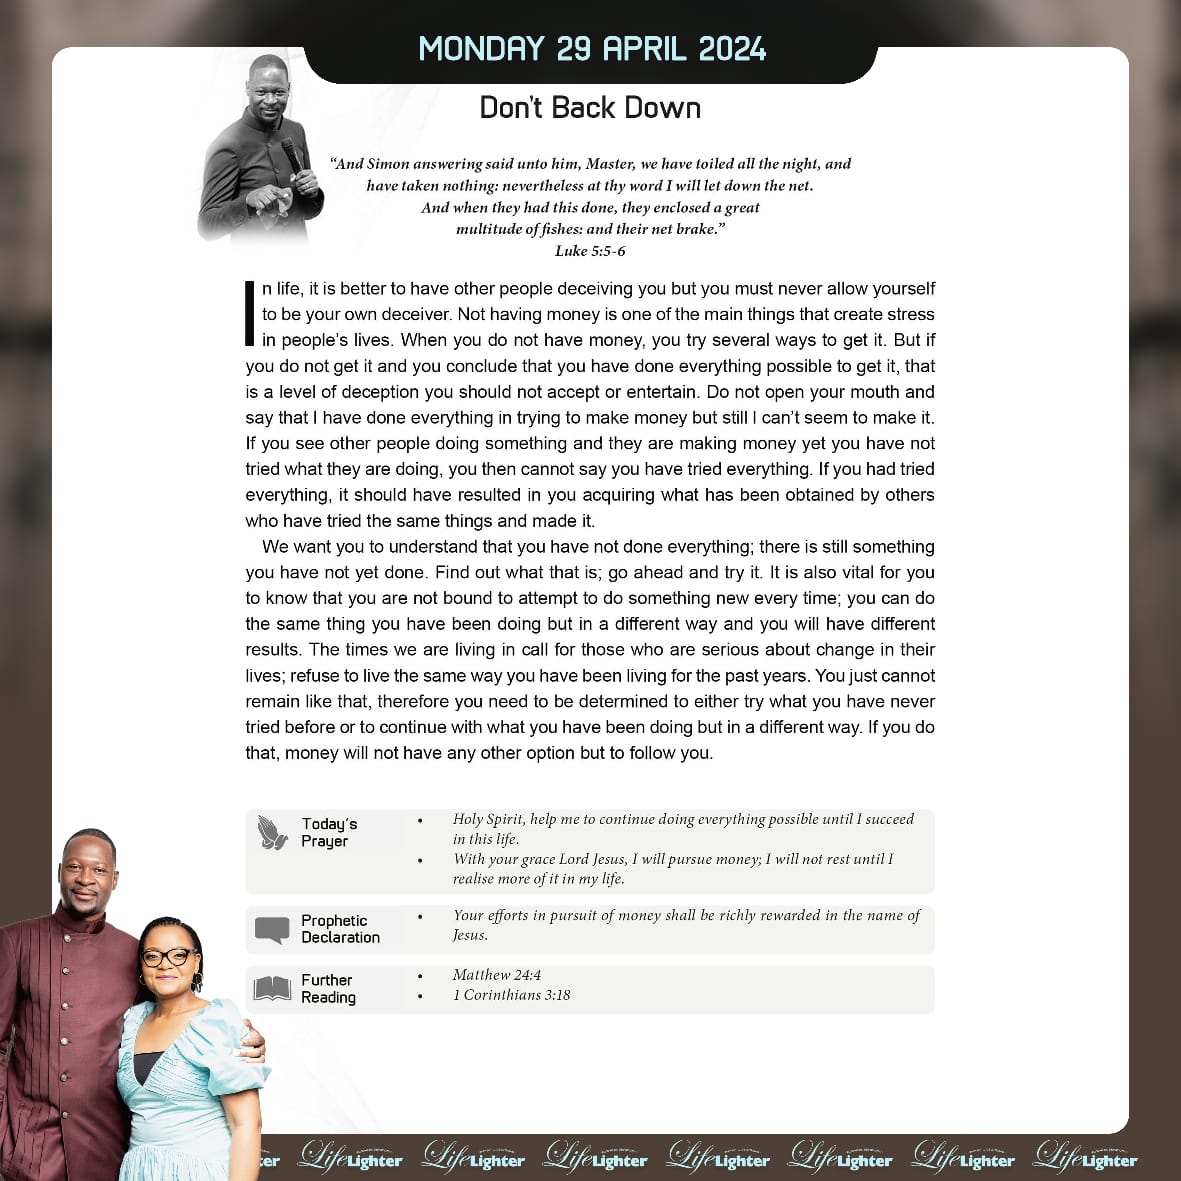 Monday 29 April 2024
Don't Back Down.
#LifeLighter #DailyDevotional #EmmanuelMakandiwa #RuthEmmanuelMakandiwa